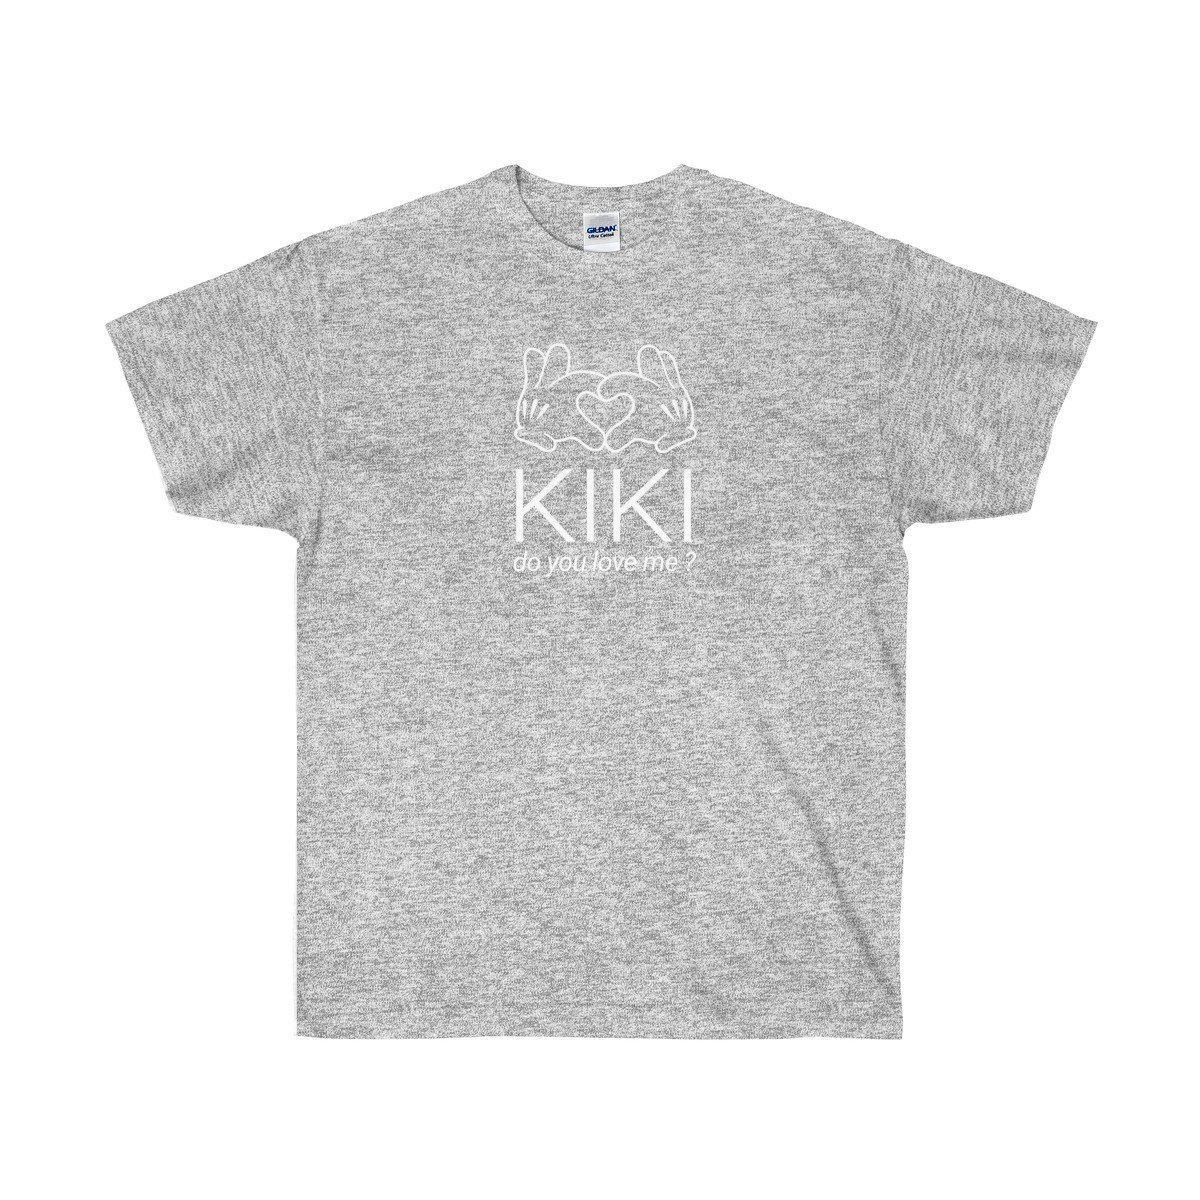 Kiki do you love me? In my feelings Tee - Drake inspired-Sport Grey-S-Archethype